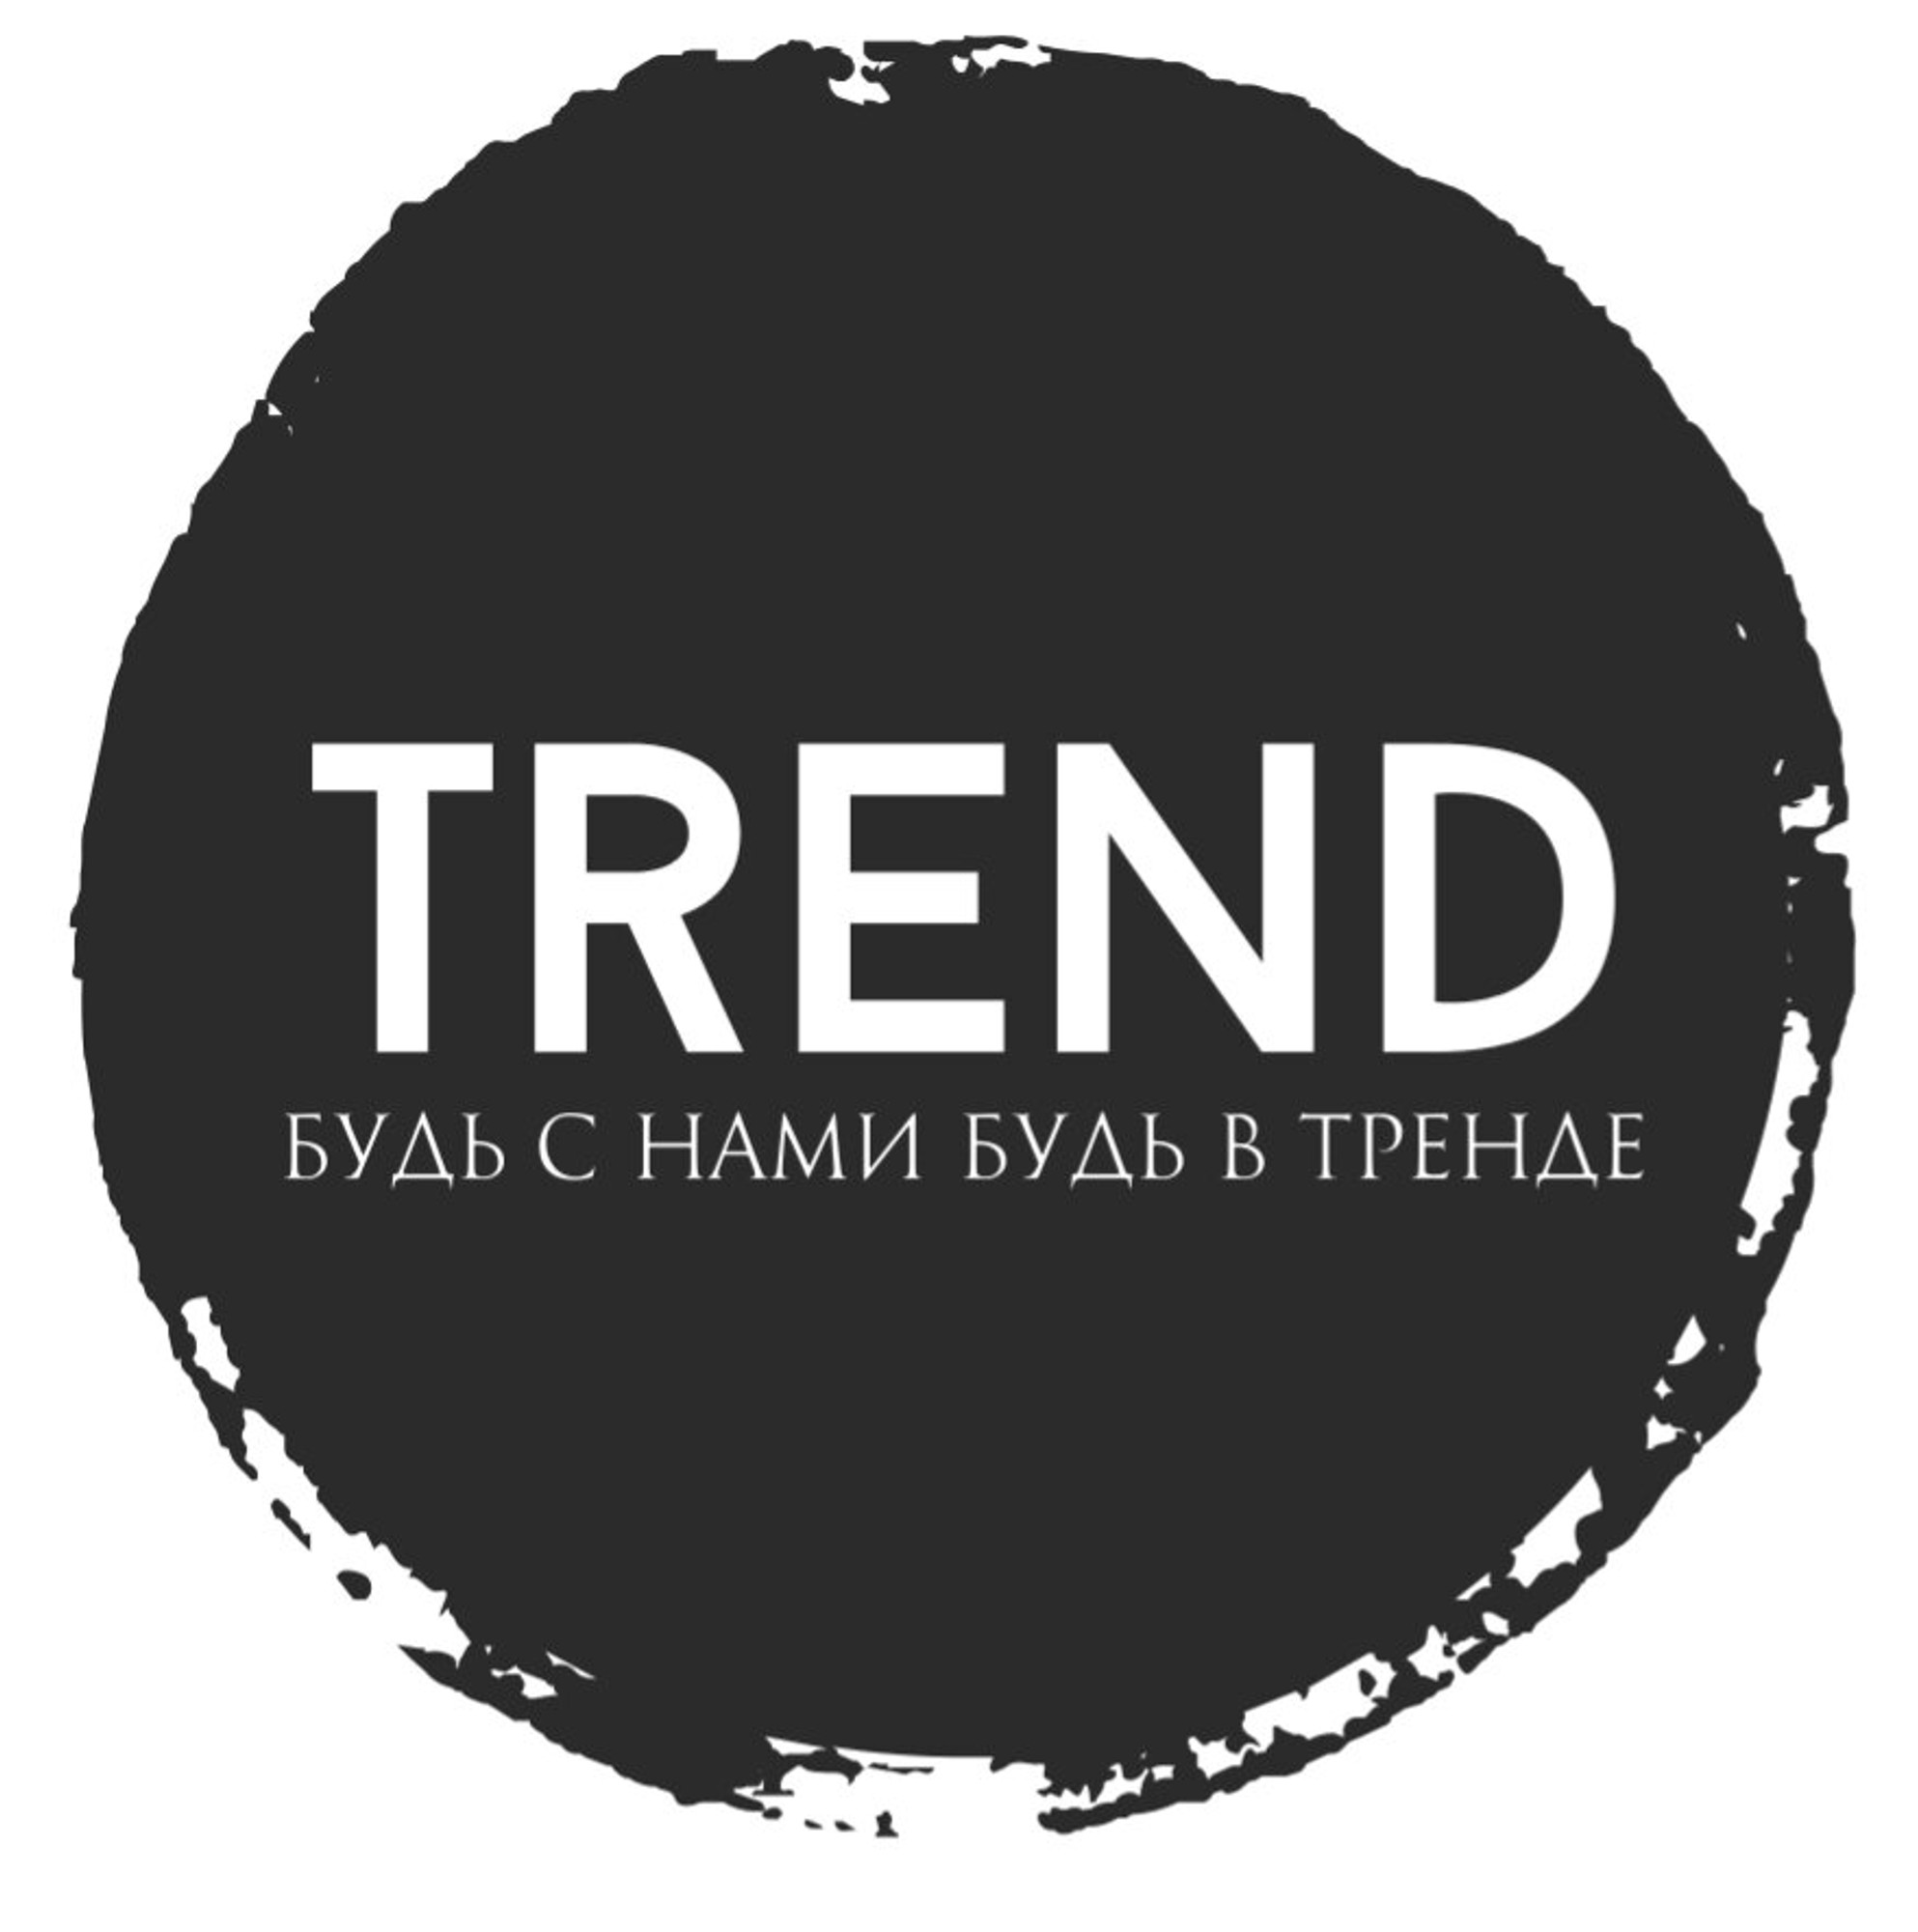 Trend (Салон красоты)